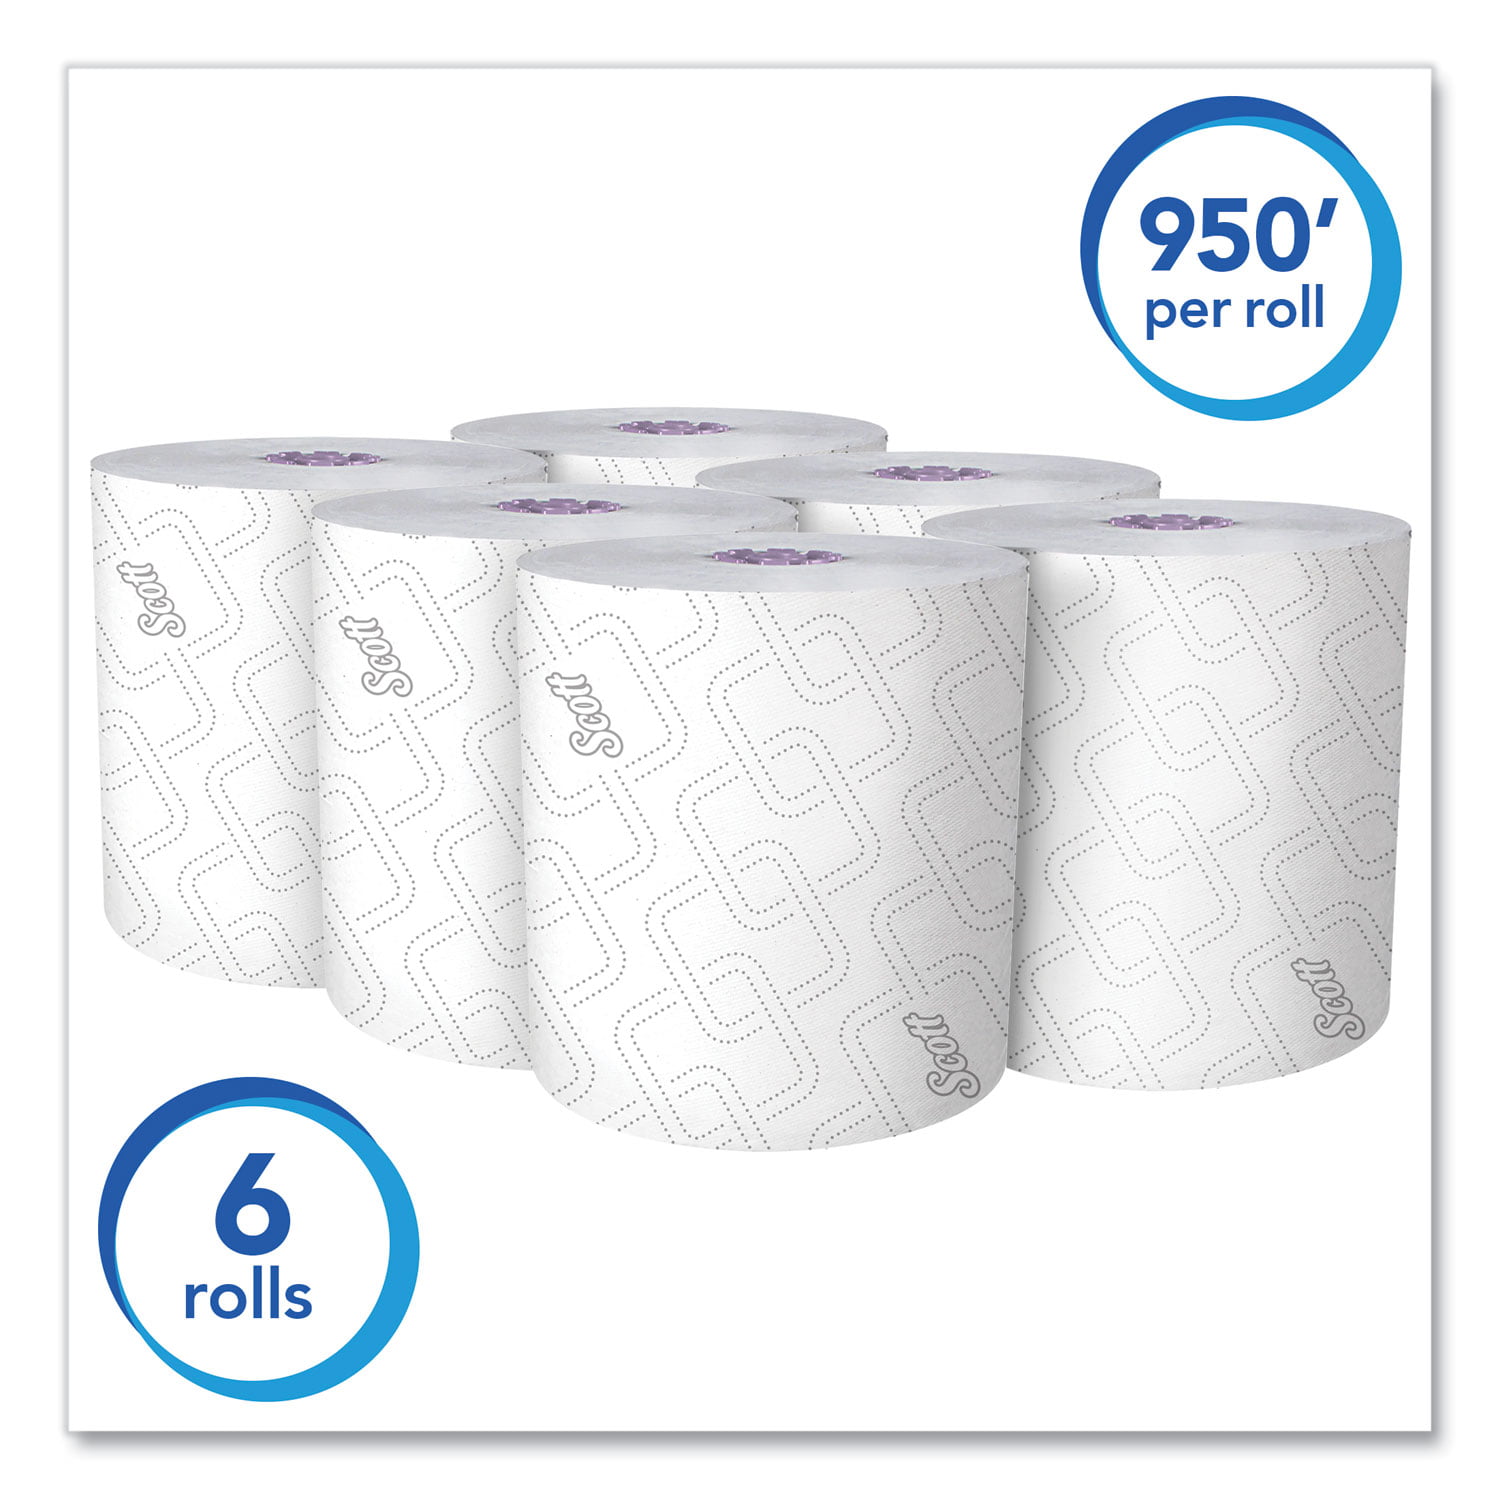 Scott Essential High Capacity Hard Roll Towel, White, 8 x 950 ft, 6 Rolls/Carton -KCC02001 - 1